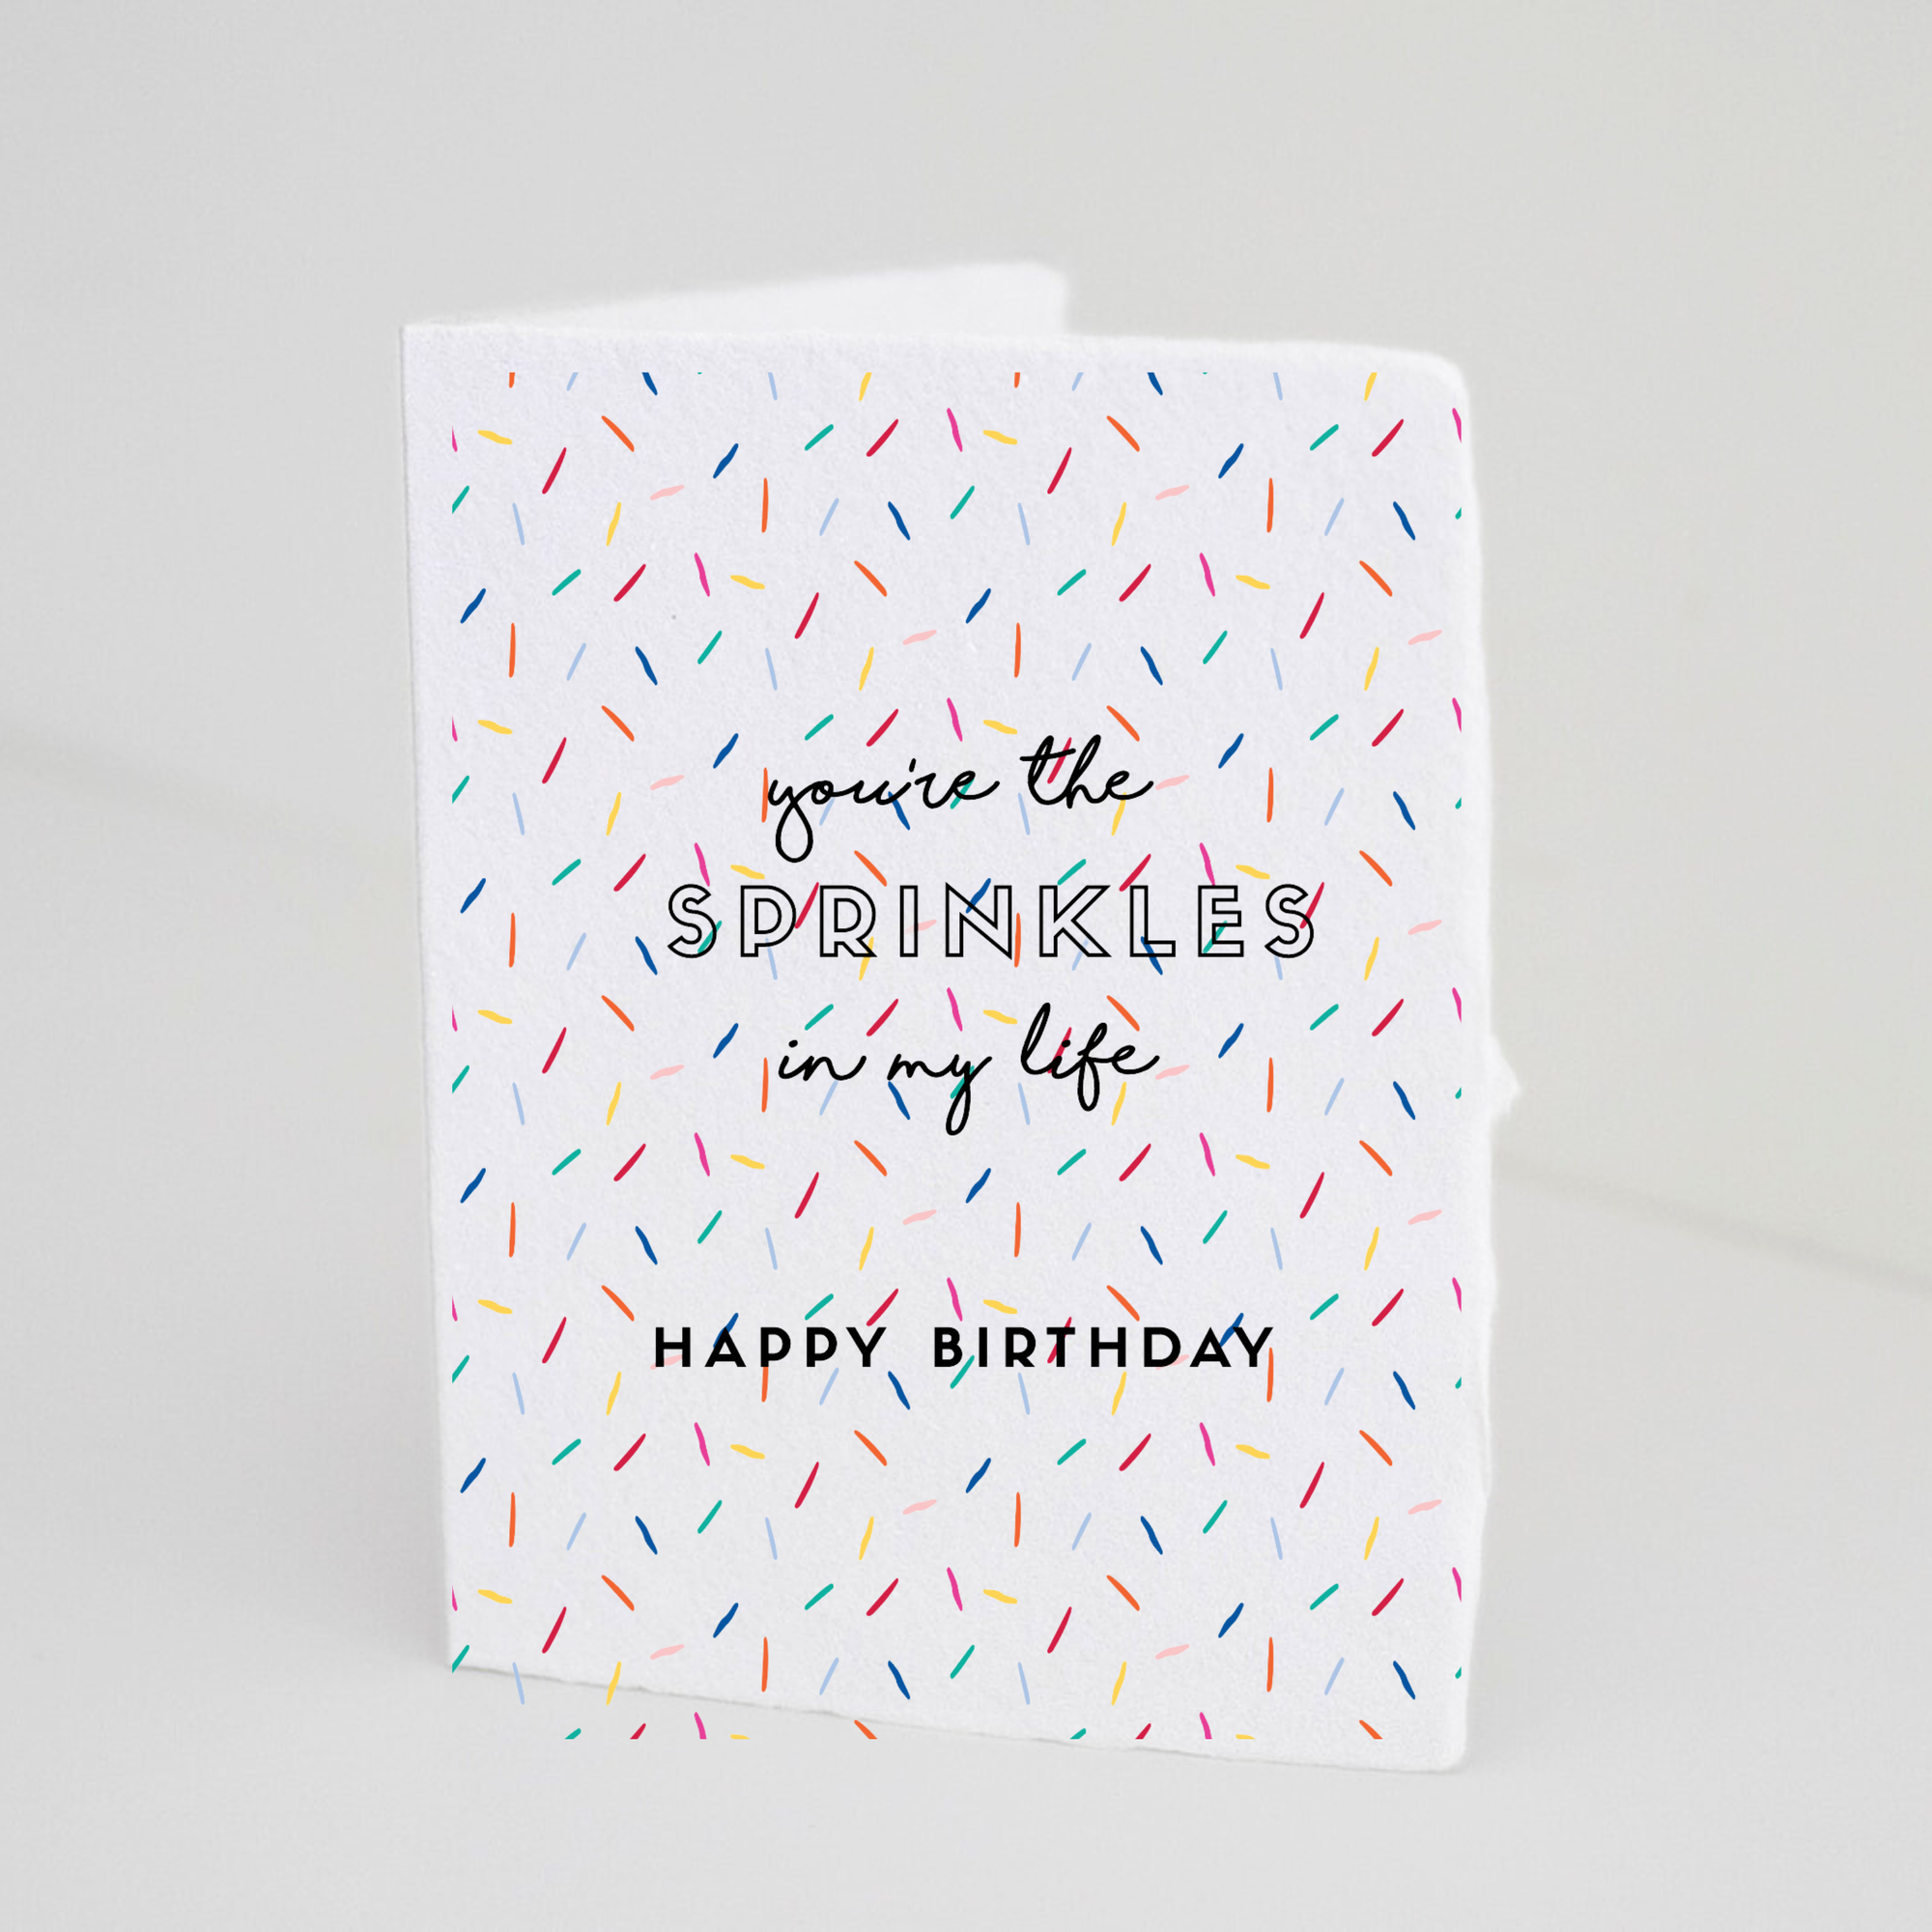 Handmade Paper "You're the Sprinkles" Birthday Friend Greeting Card